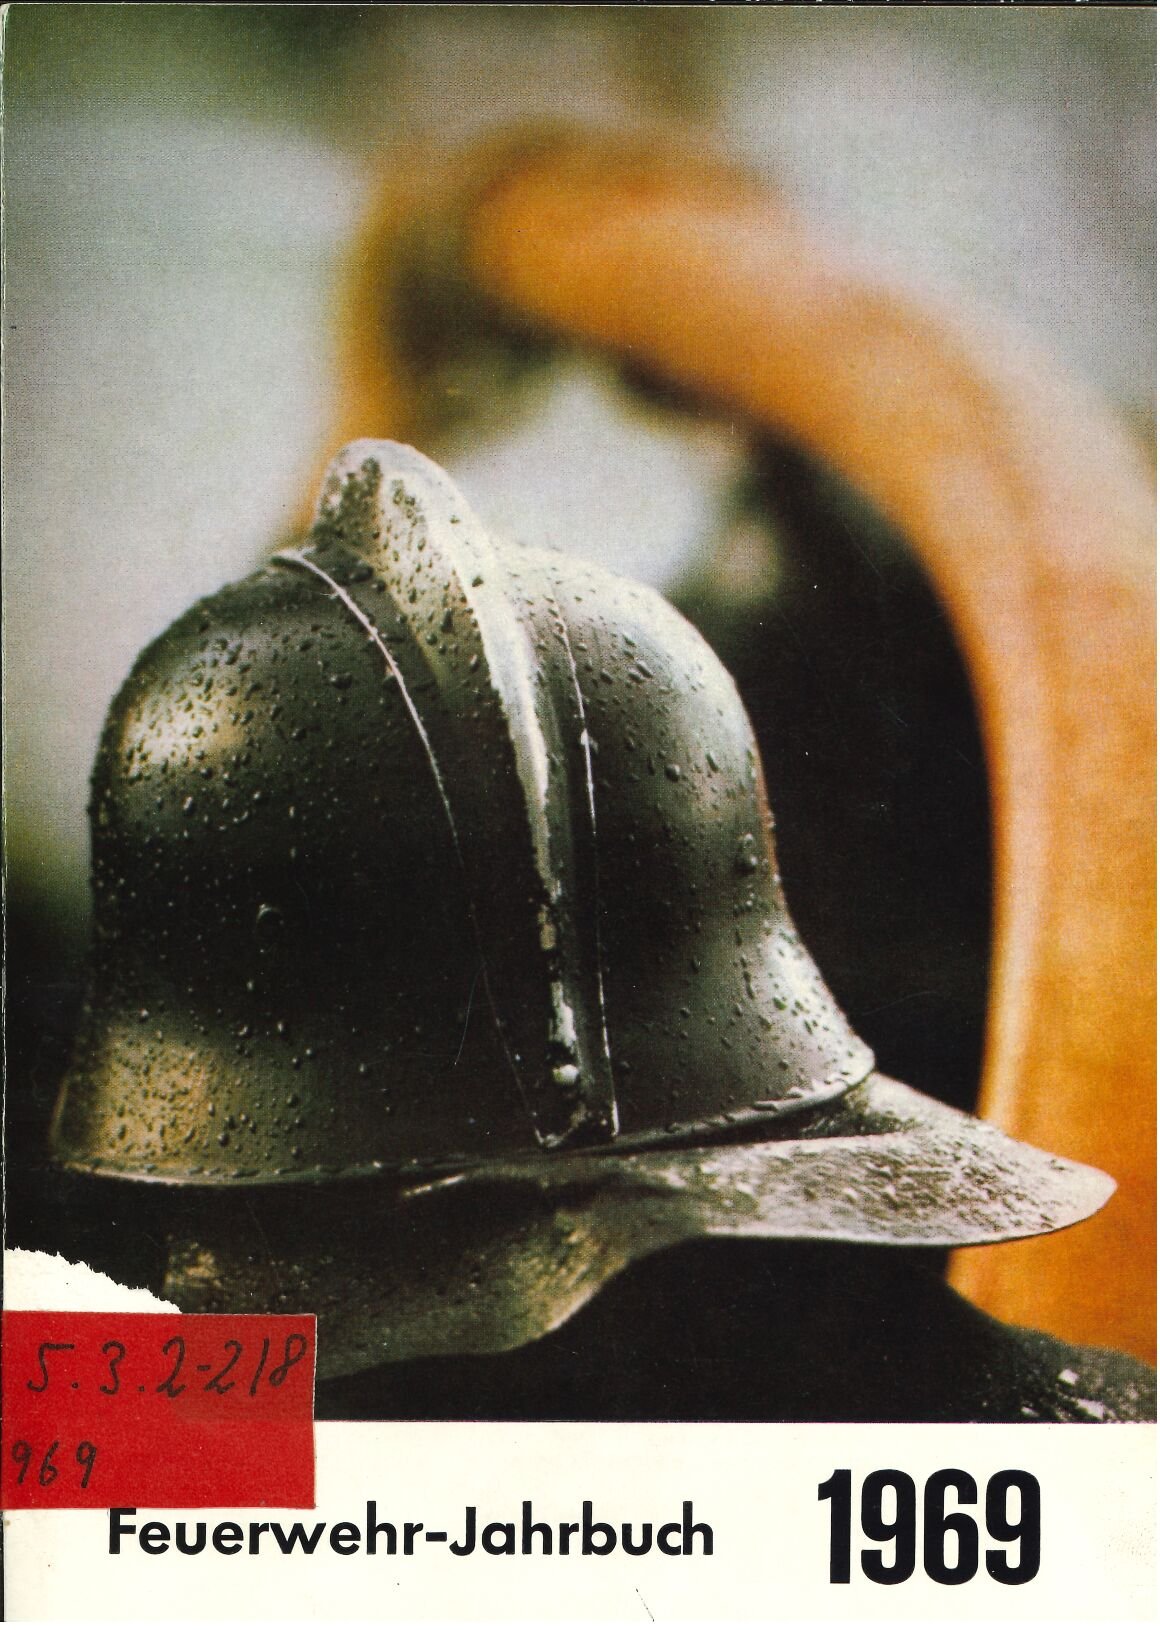 Feuerwehr-Jahrbuch 1969 (Feuerwehrmuseum Grethen CC BY-NC-SA)